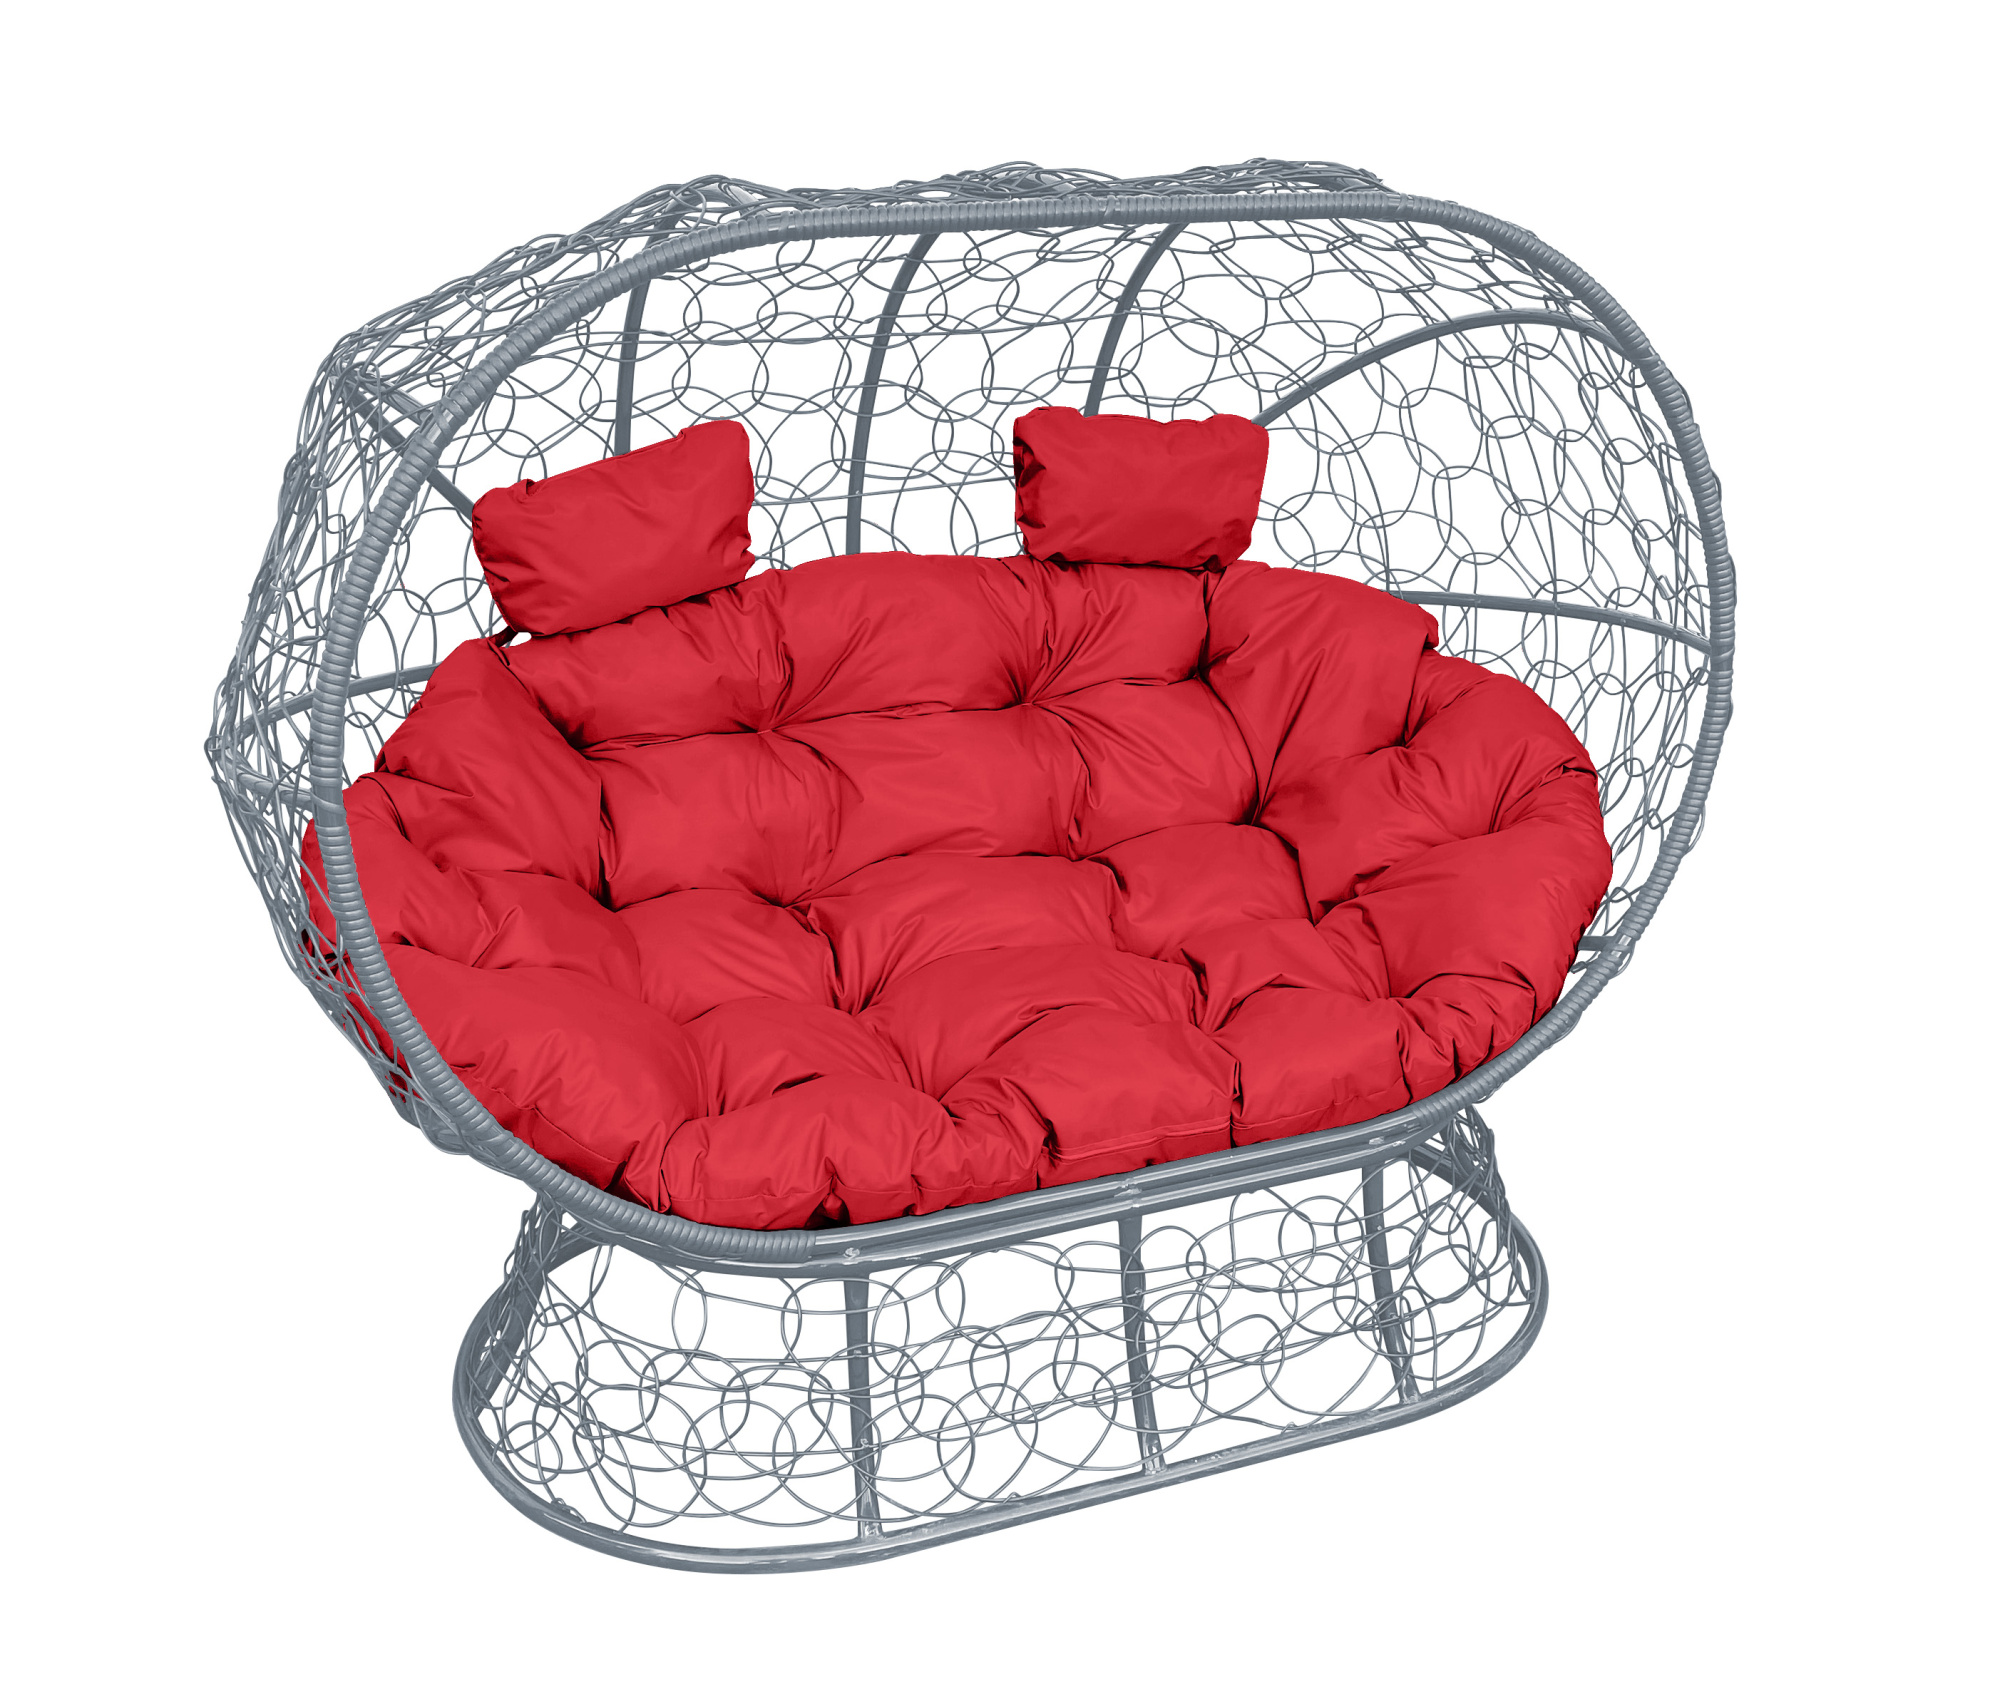 фото Диван m-group "лежебока" на подставке с ротангом серый, красная подушка